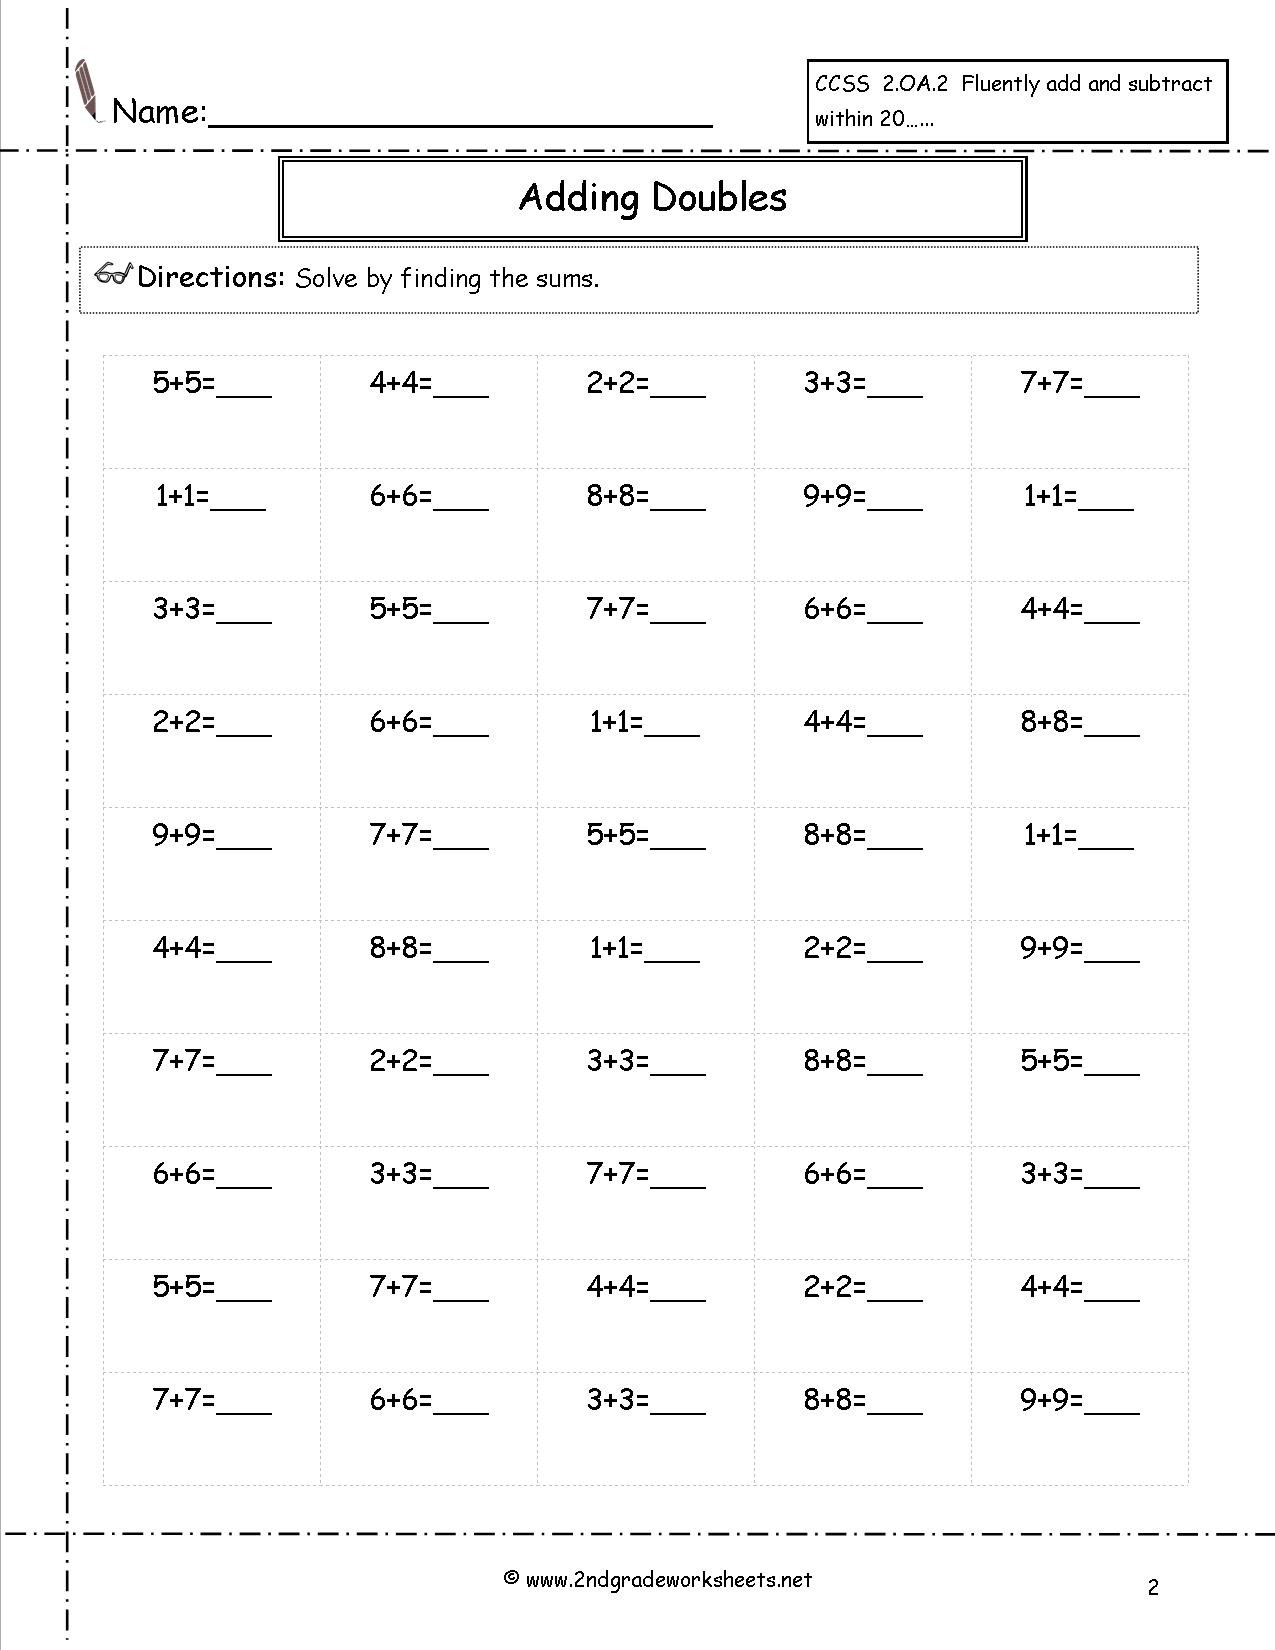 Adding Doubles Worksheet 2nd Grade Free Single Digit Addition Worksheets